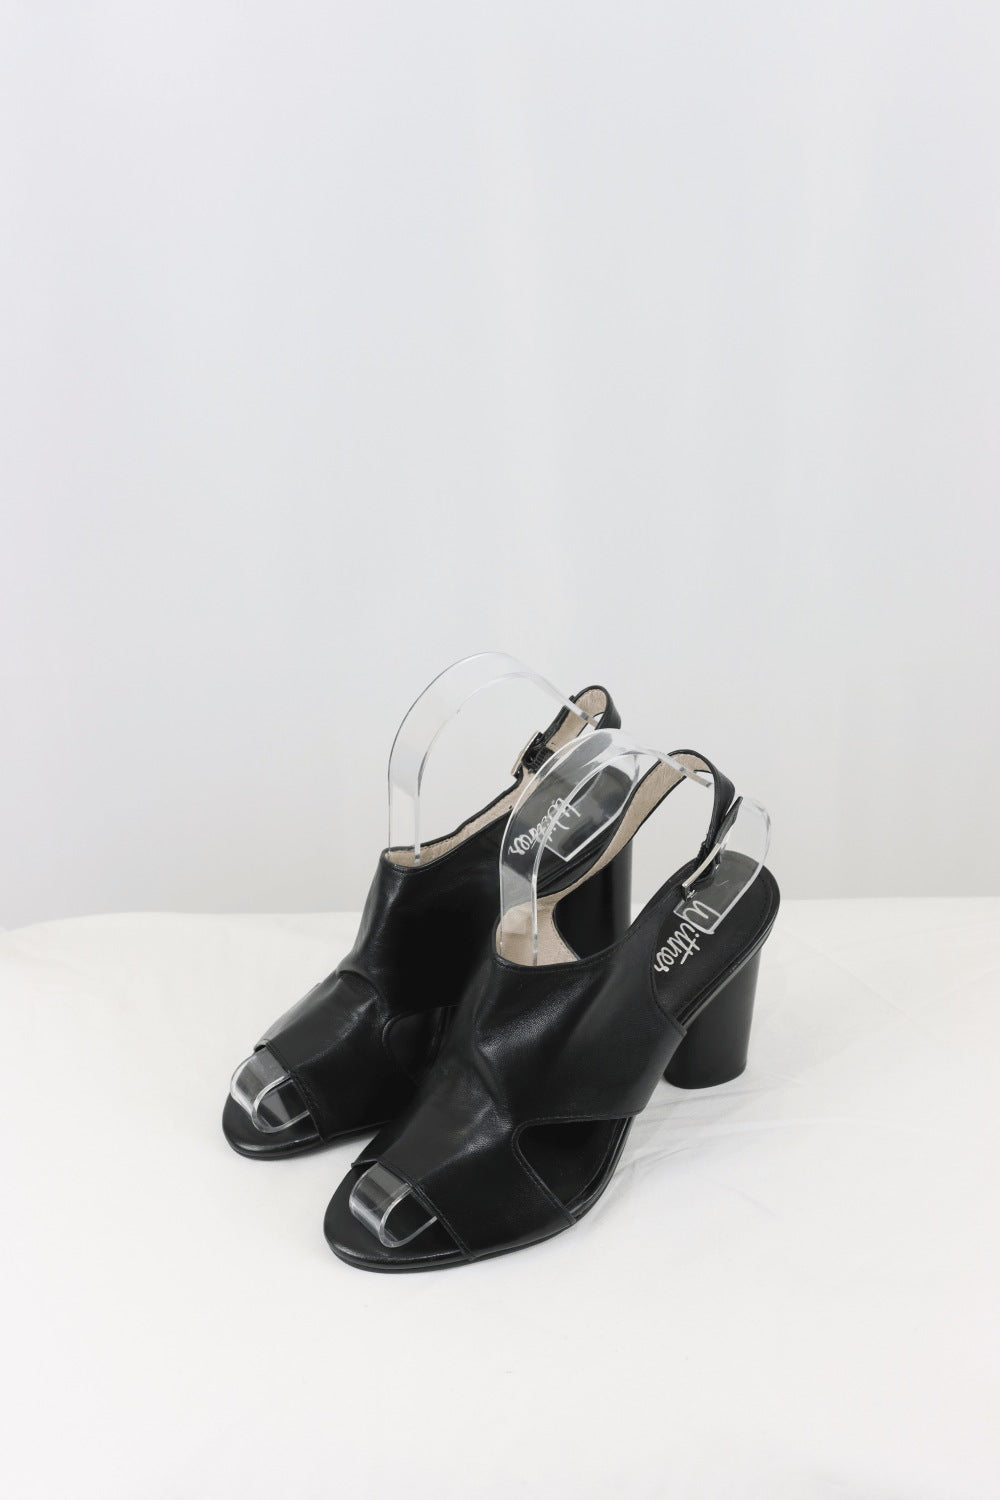 Wittner Black Sandals (36EU)